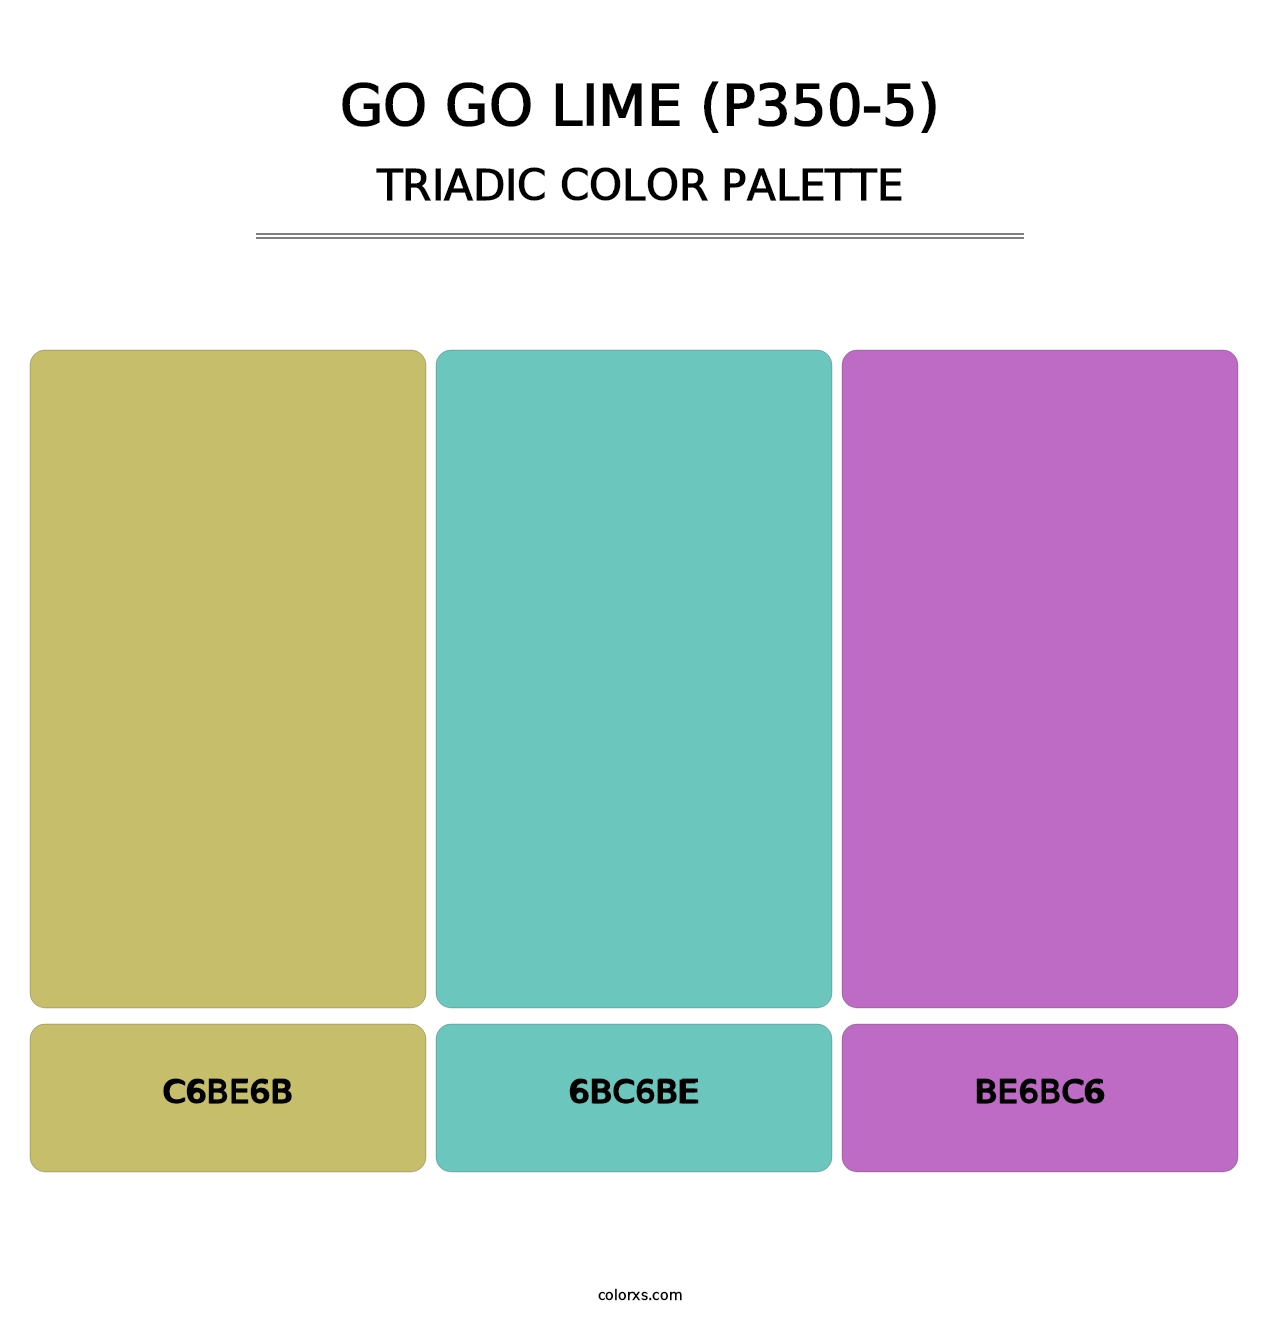 Go Go Lime (P350-5) - Triadic Color Palette